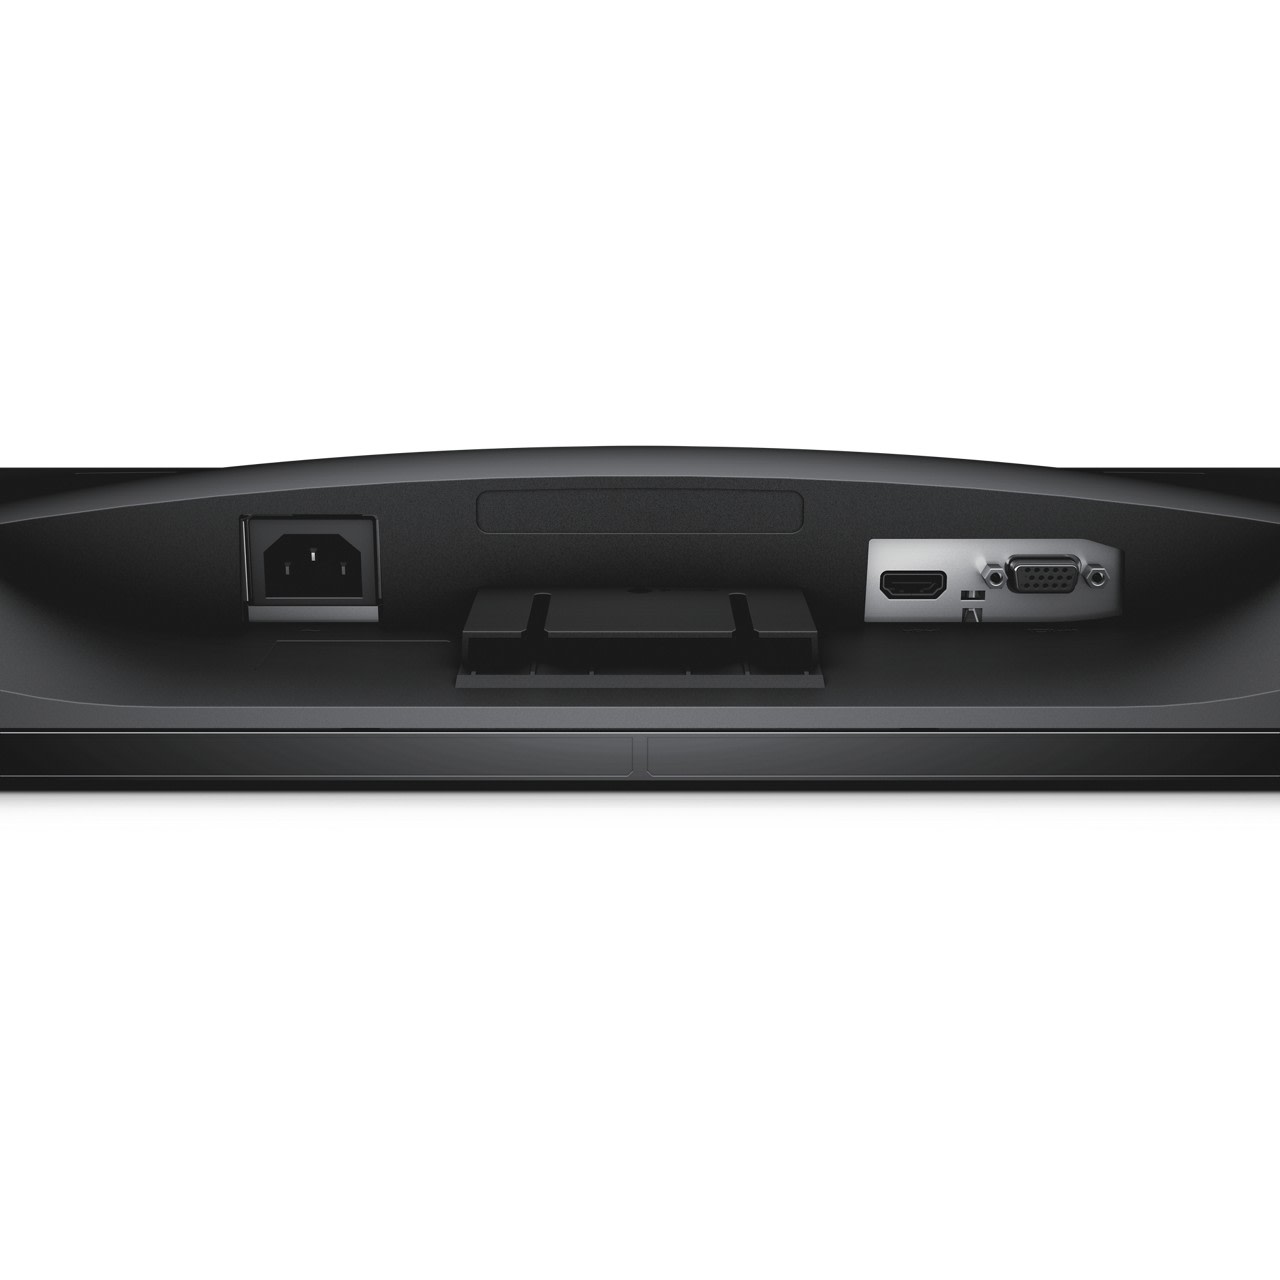 Kiwi Meal spoon Dell SE2416H 24" Full HD IPS Widescreen LED Monitor SE2416H - Adorama